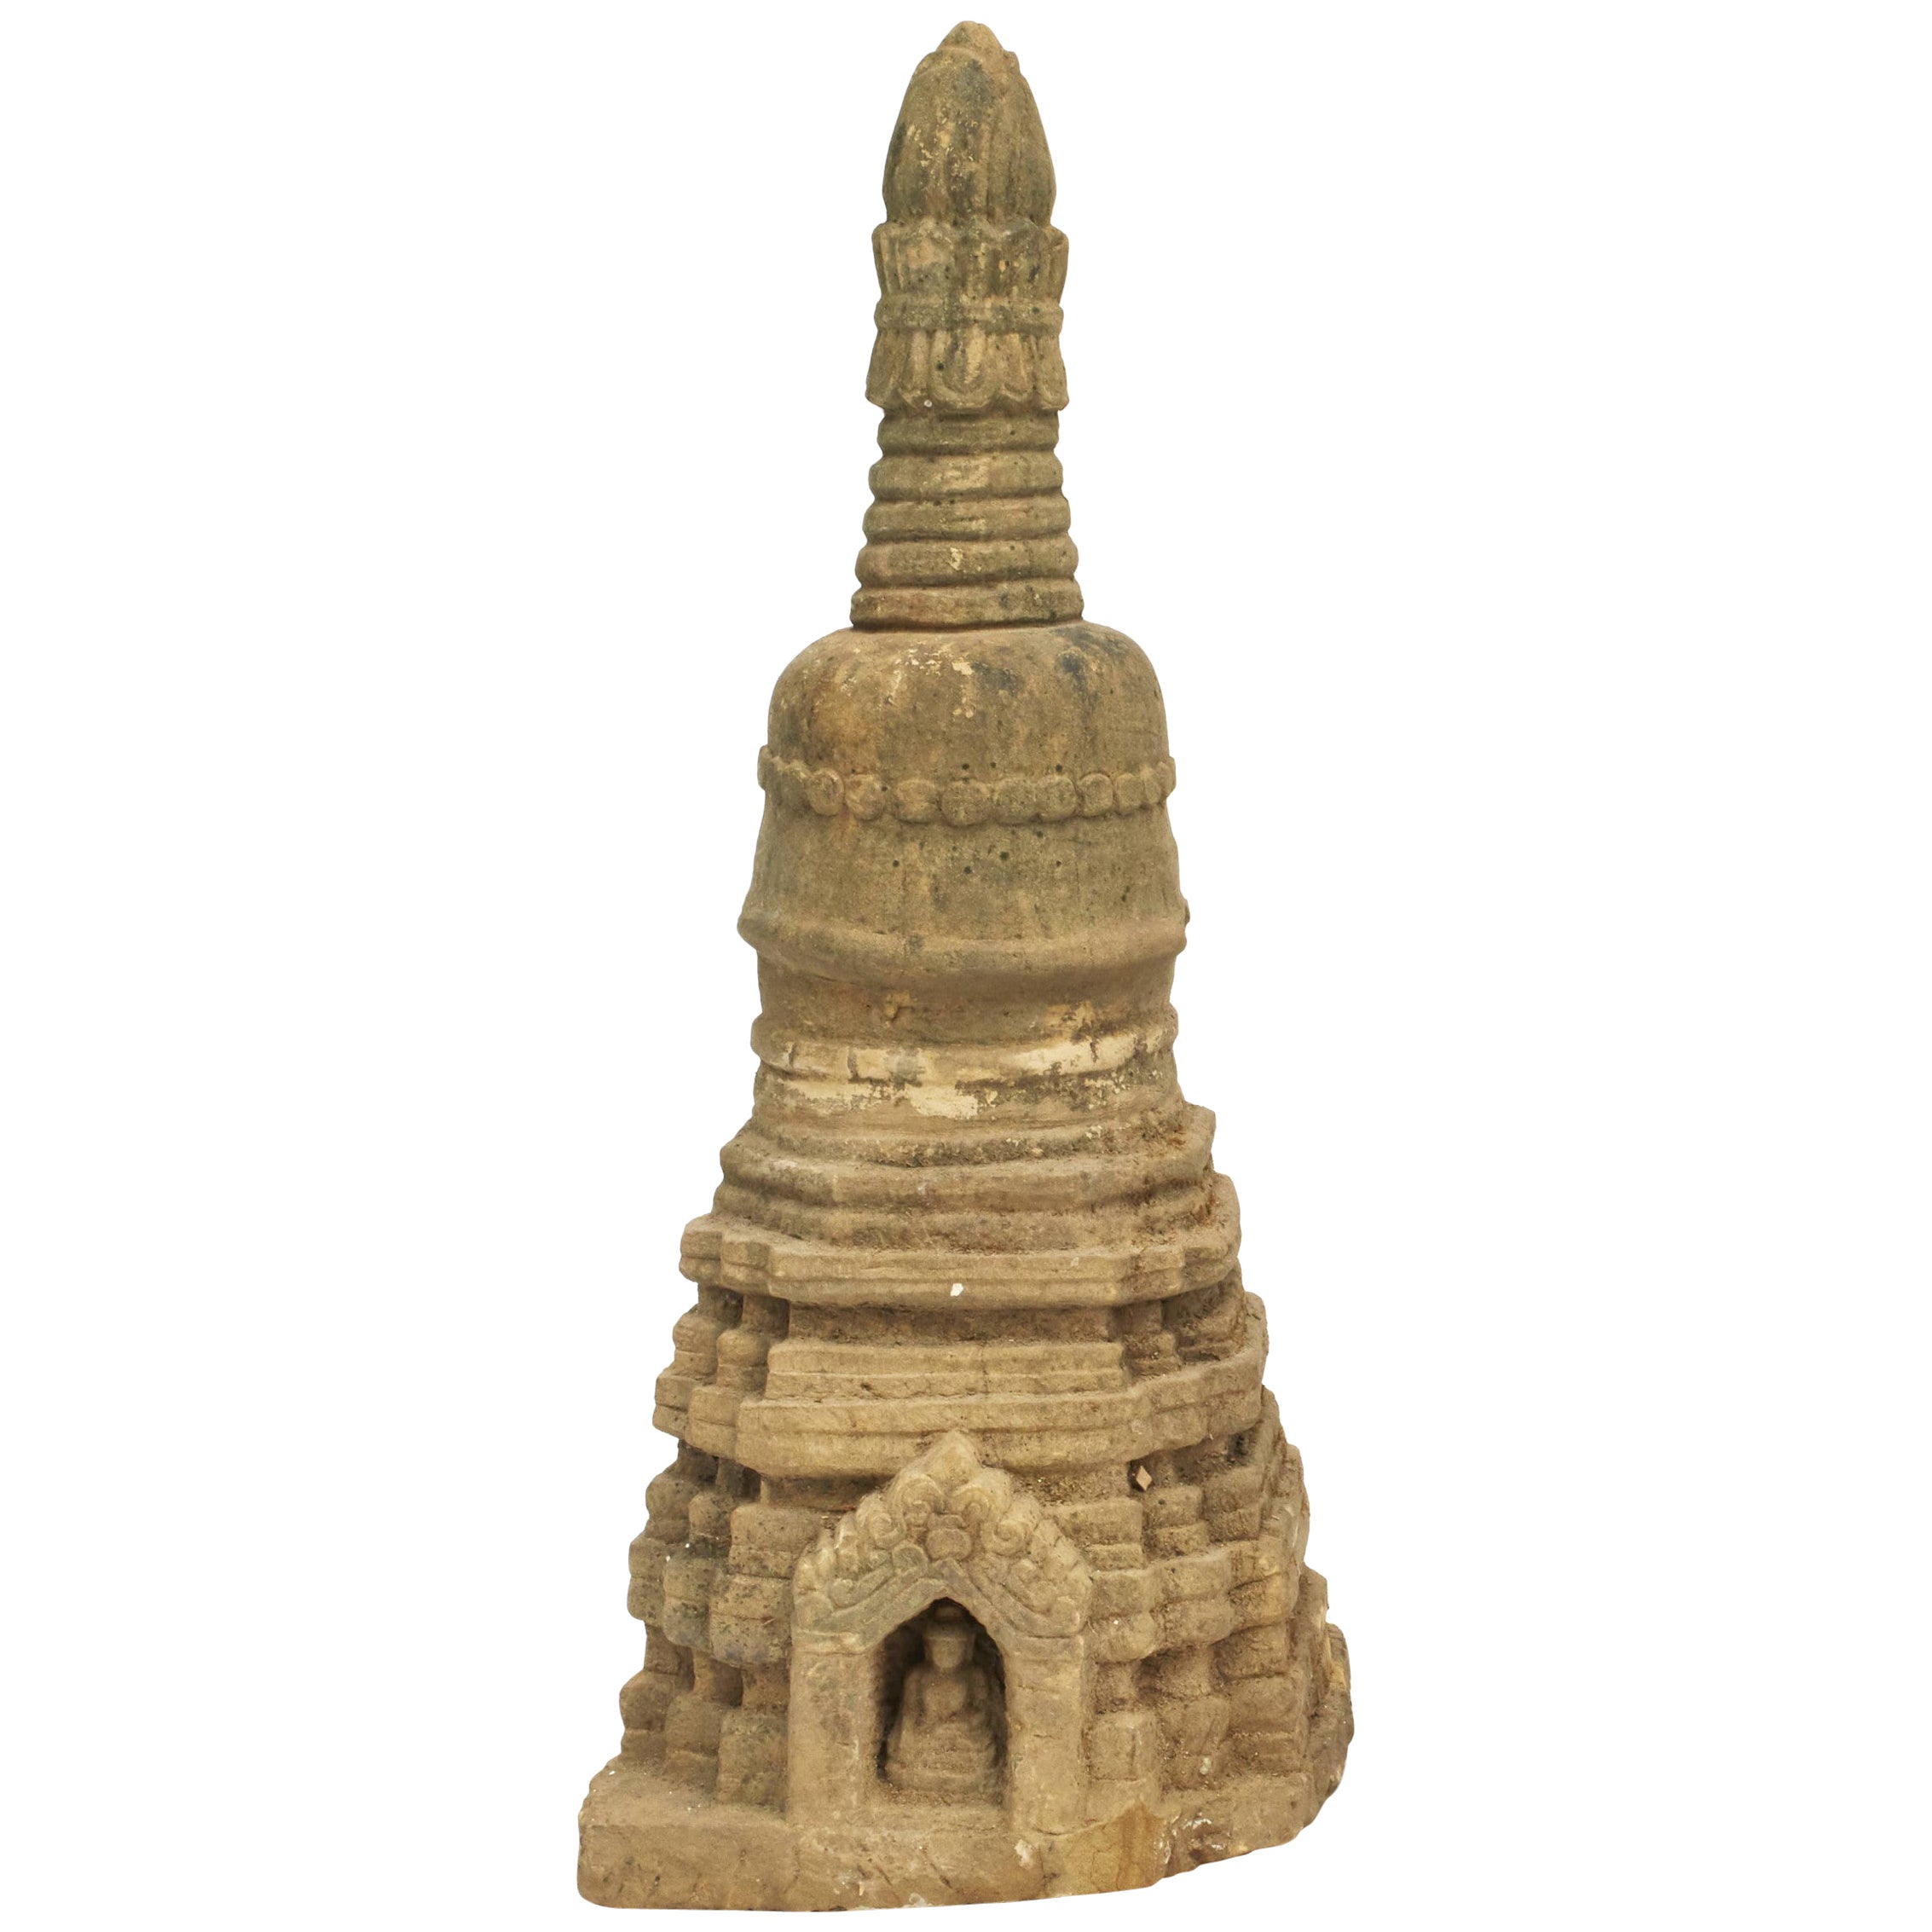 400-600 Year Old Burmese Sandstone Stupa Pagoda Sculpture